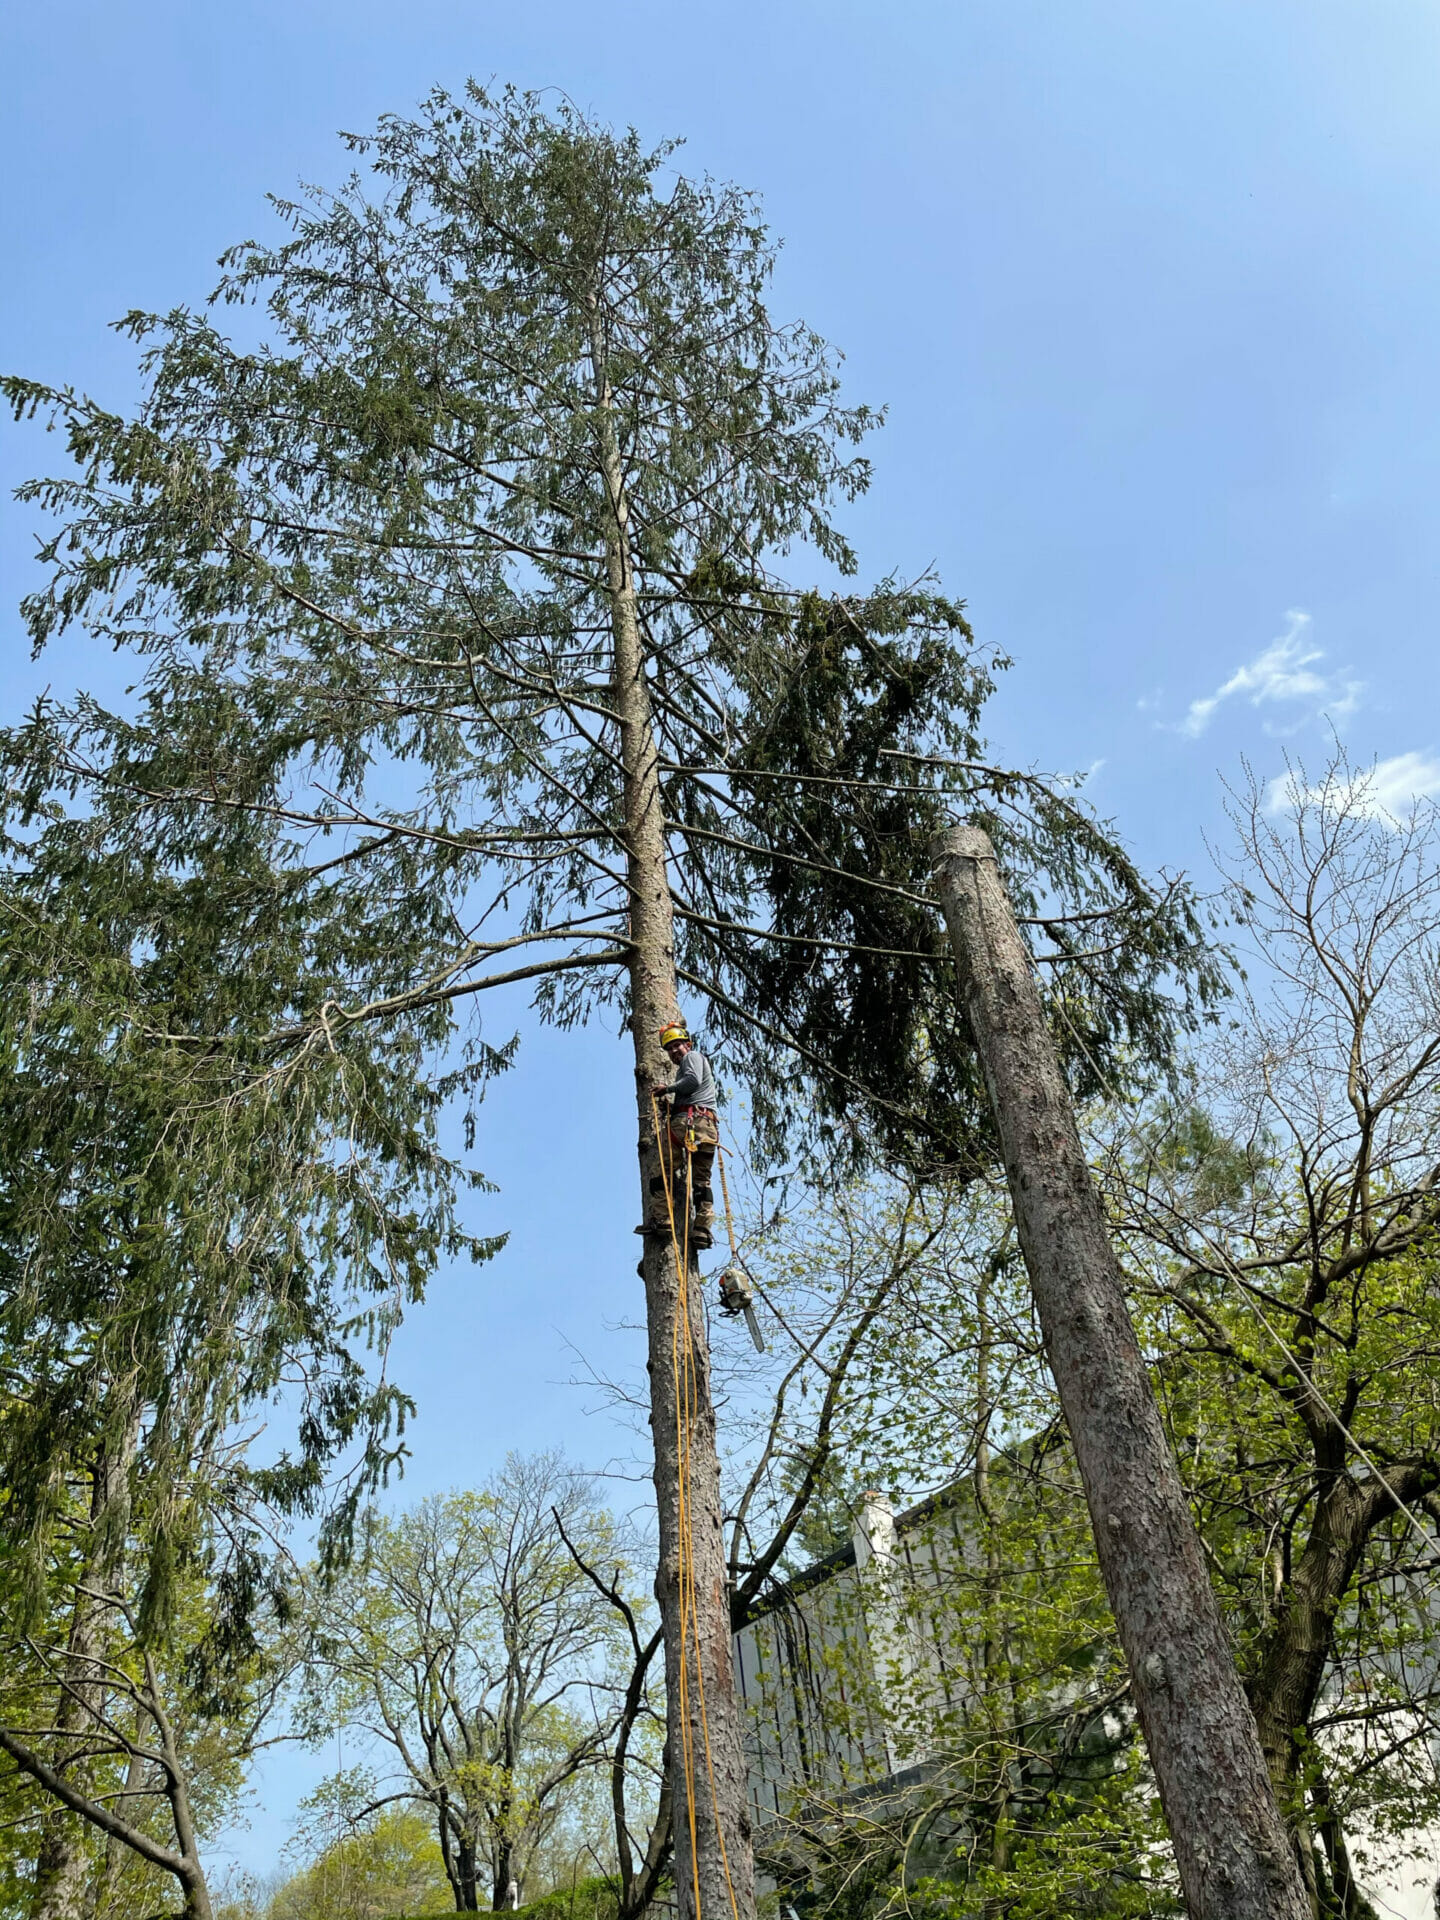 Worker climbing tree to trim off limbs